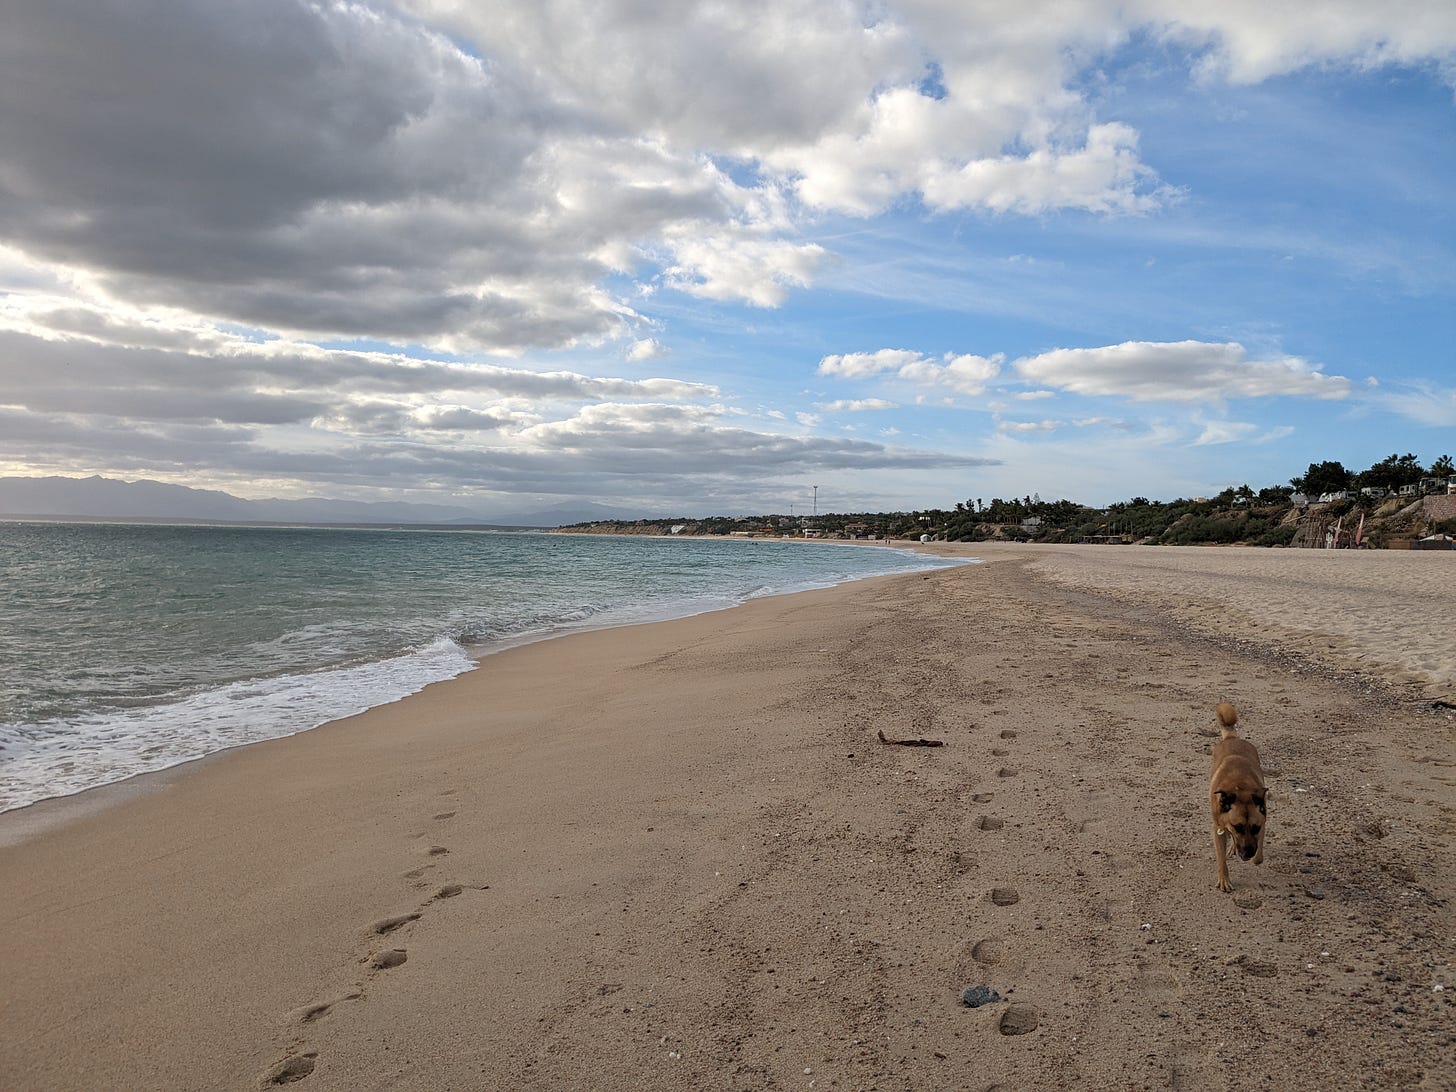 Beach scene with dog